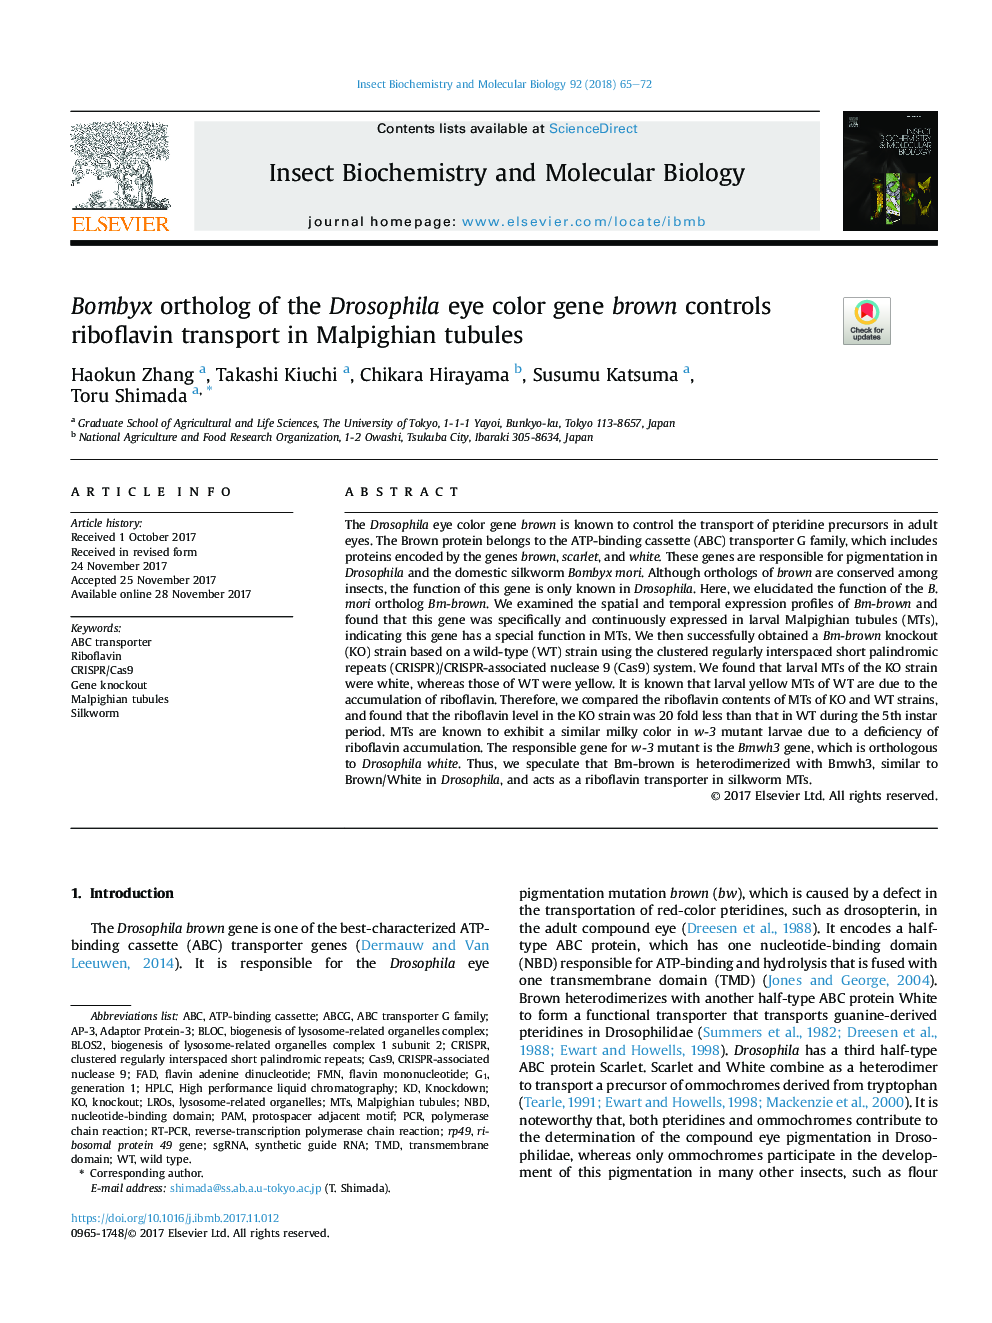 Bombyx ortholog of the Drosophila eye color gene brown controls riboflavin transport in Malpighian tubules